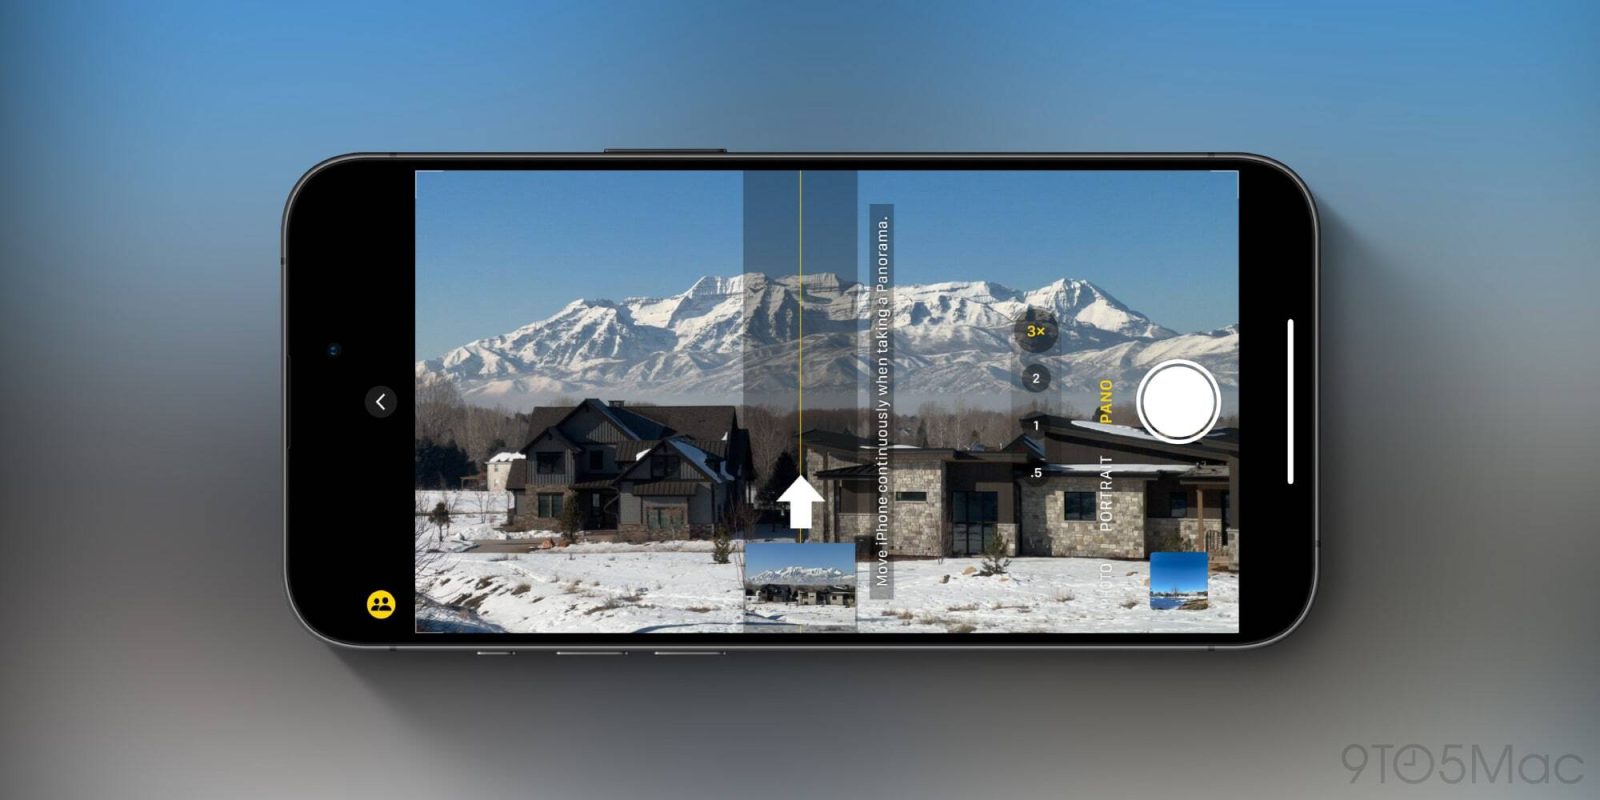 iPhone panoramic camera tricks